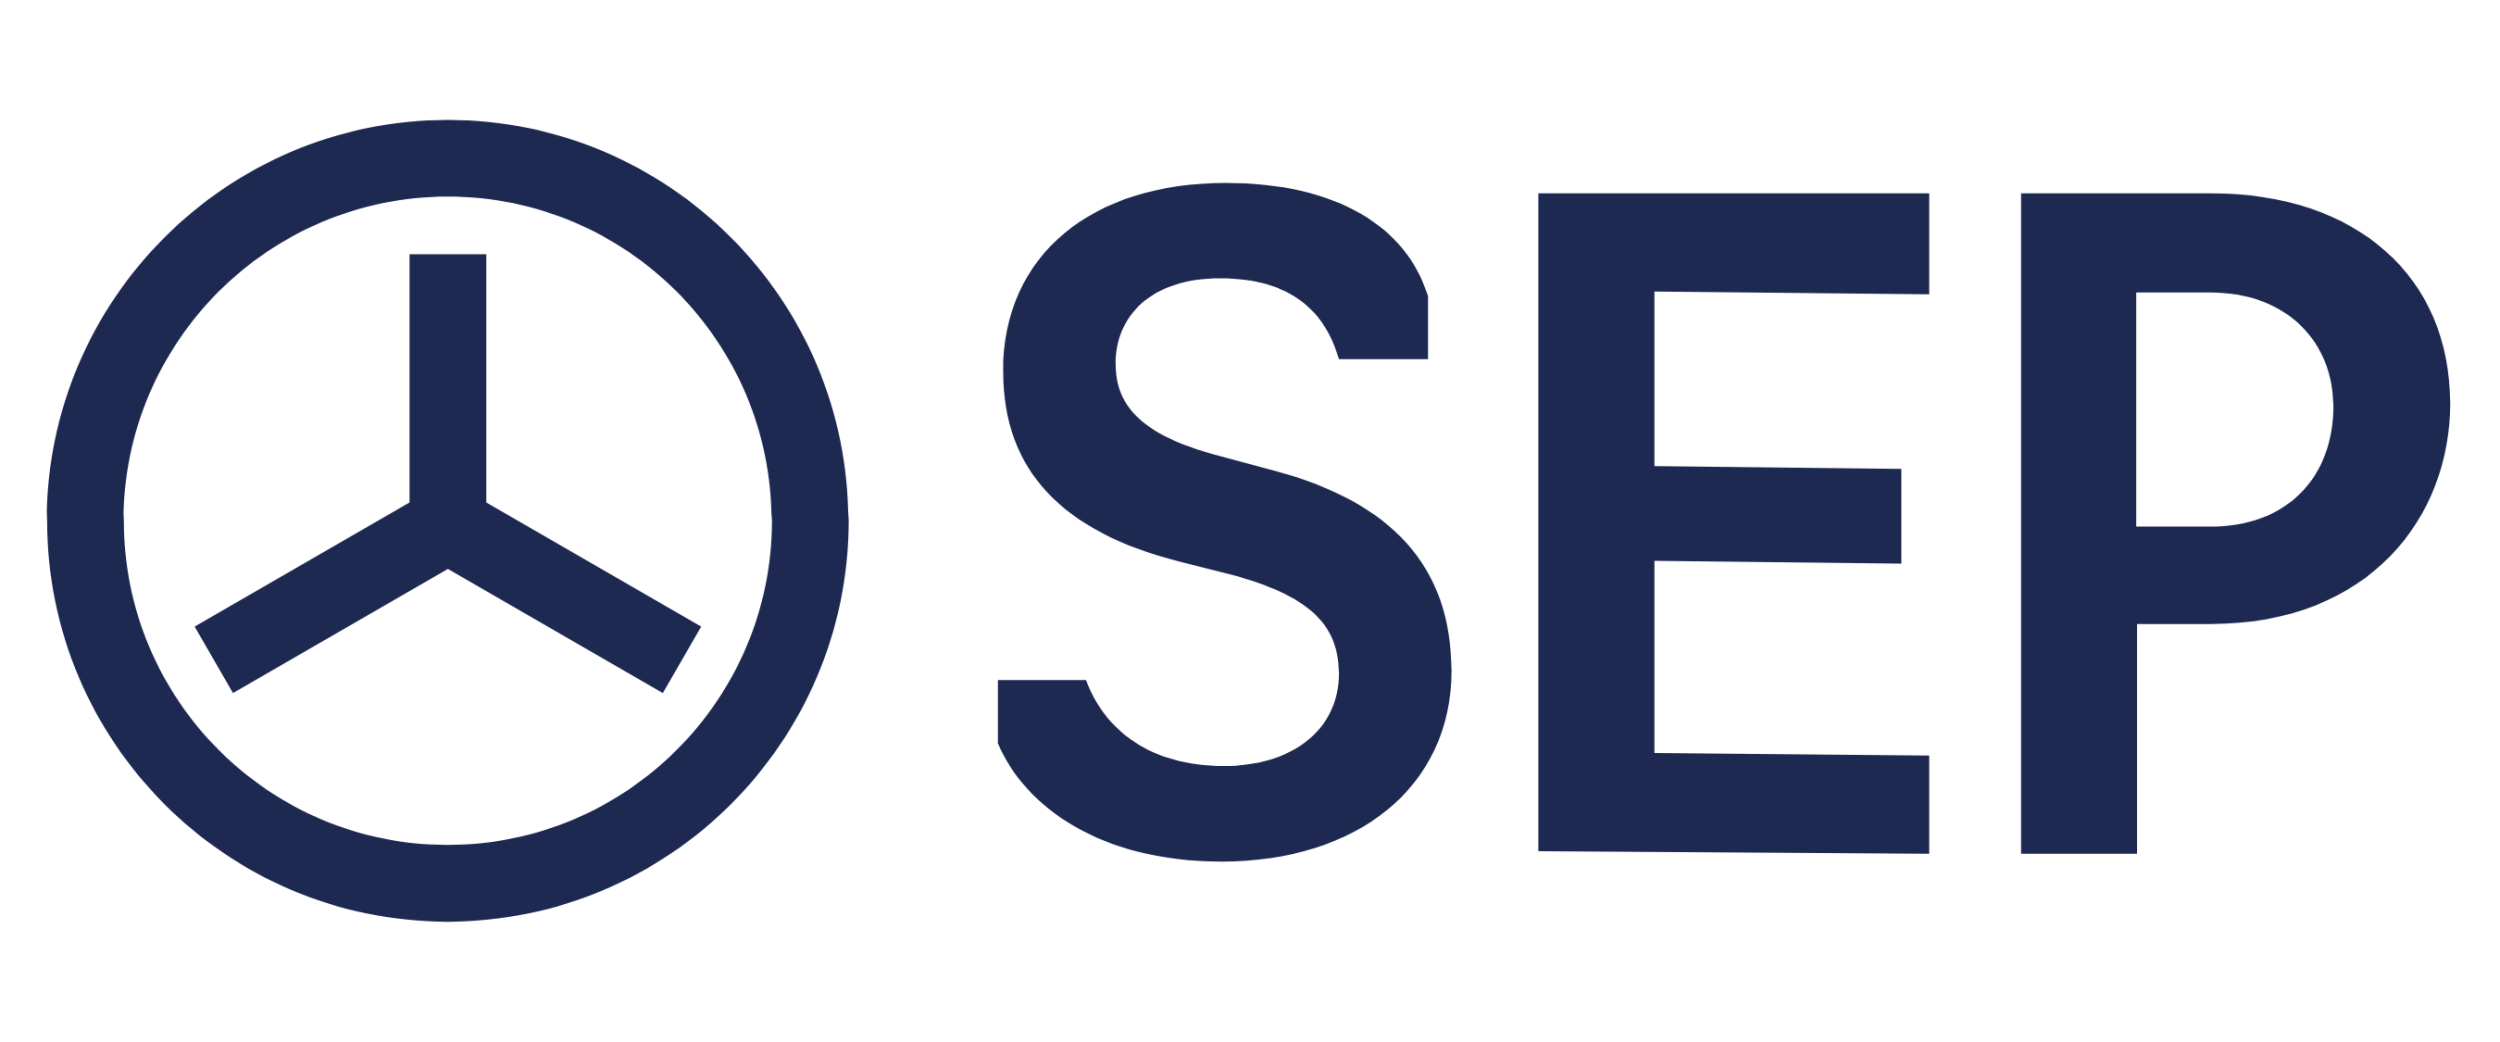 logotipo azul marino